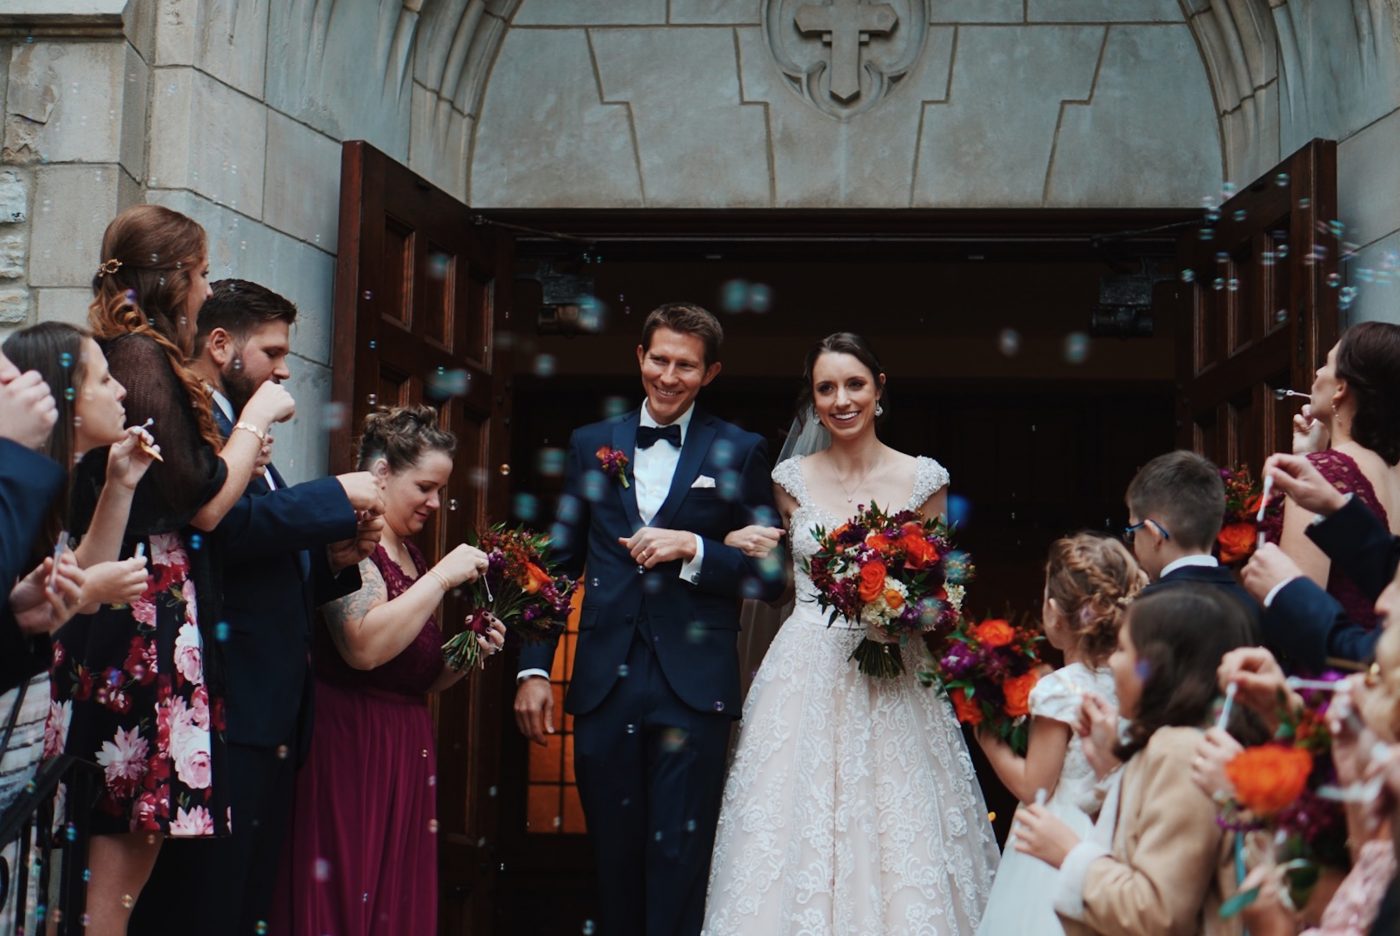 CIVIL WEDDING VS A CHURCH WEDDING